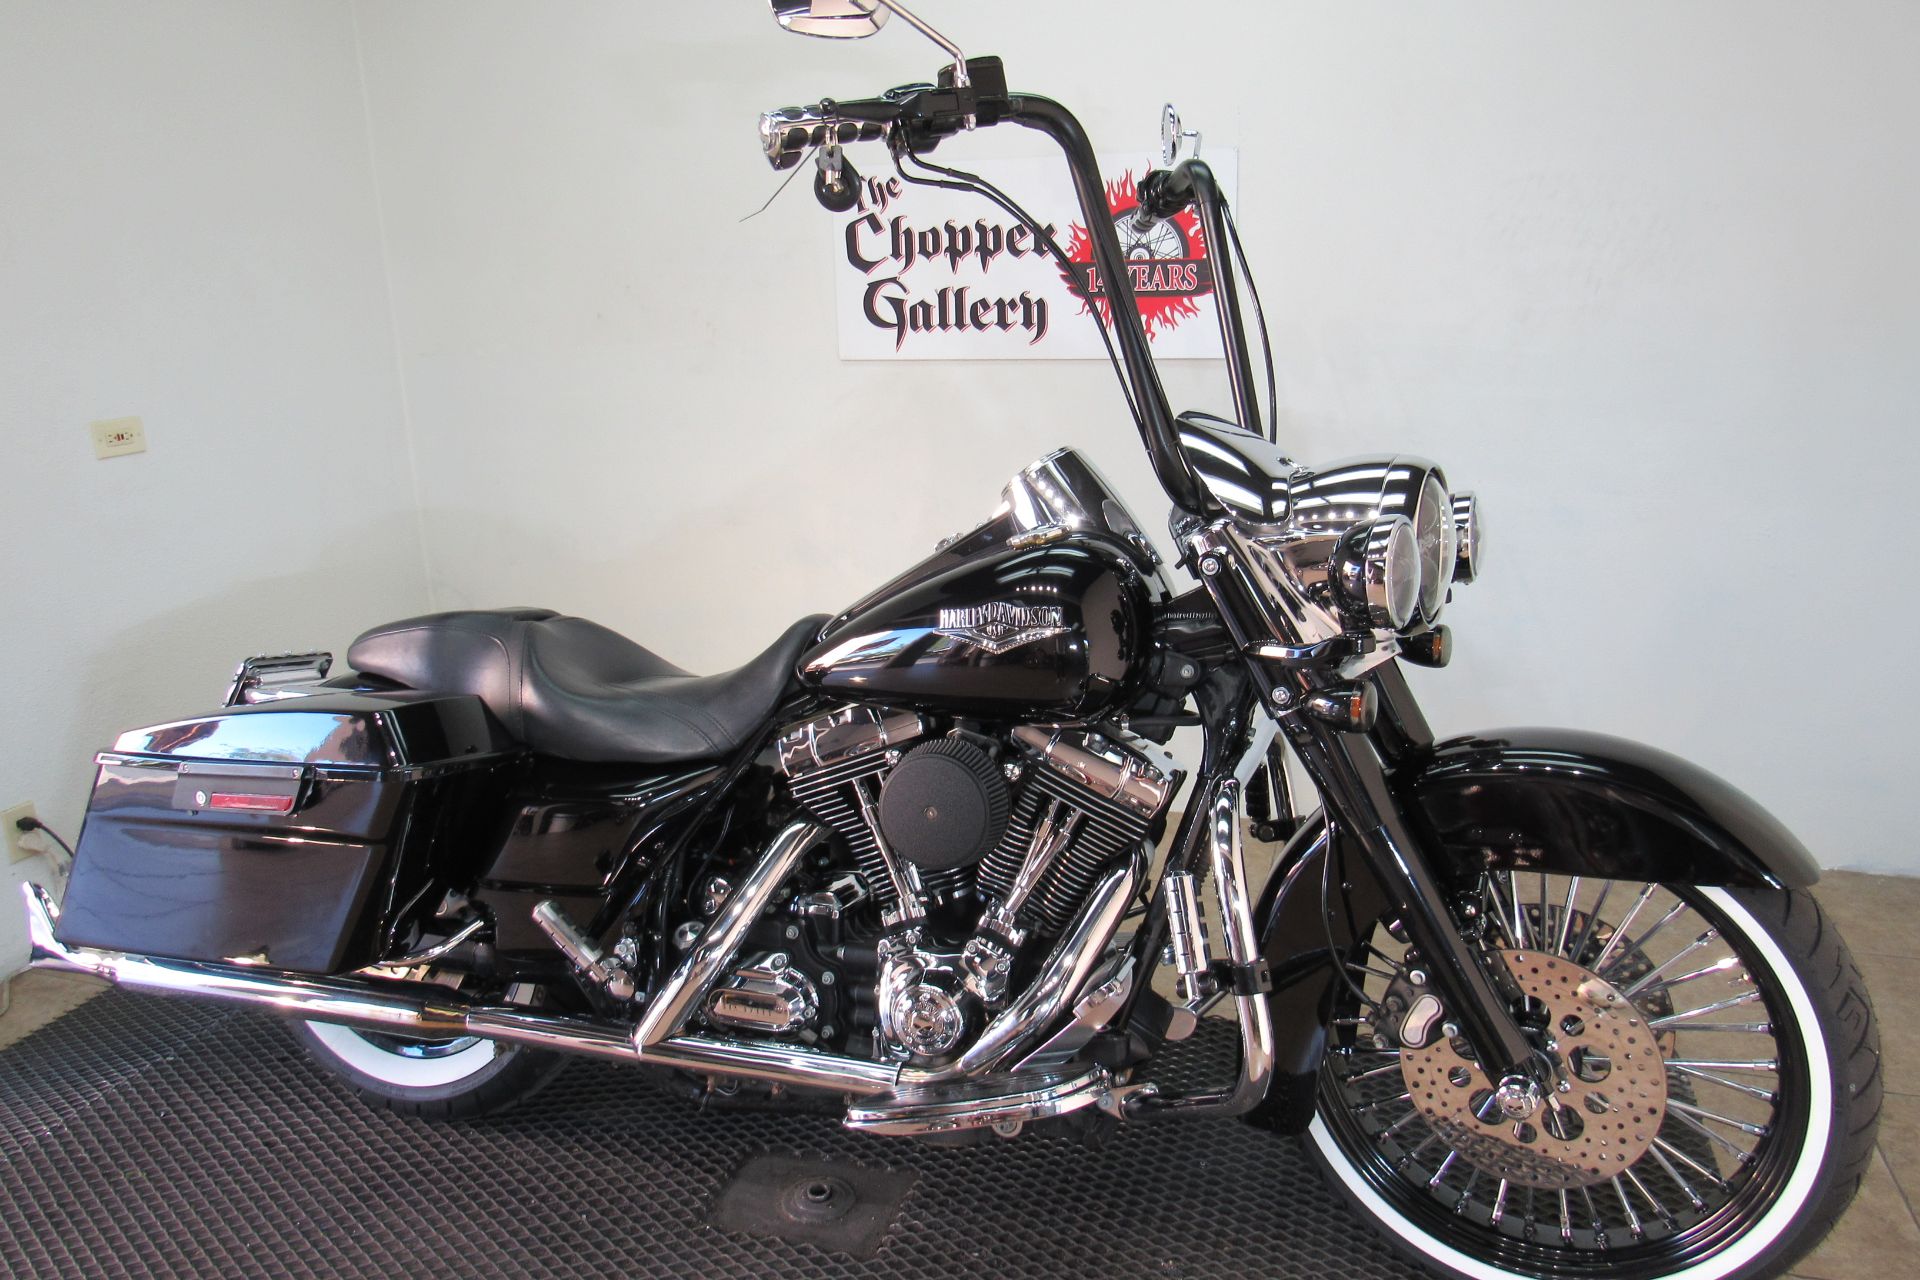 2007 Harley-Davidson FLHRS Road King® Custom in Temecula, California - Photo 3